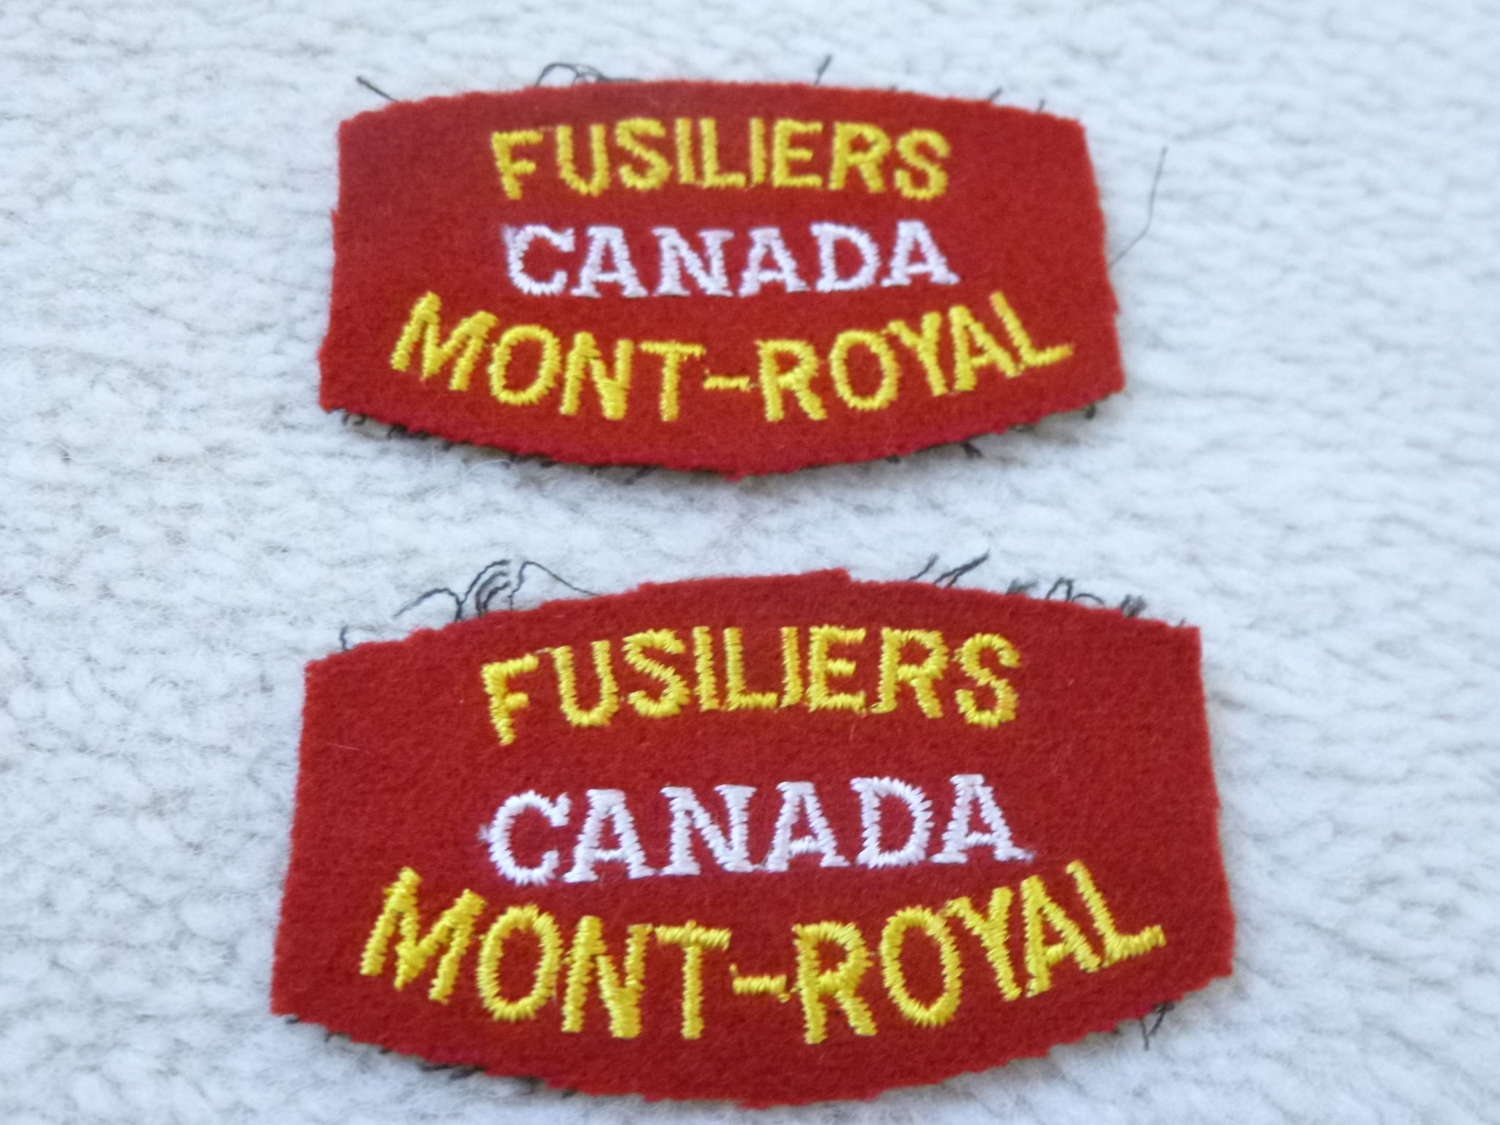 Canadian Fuseliers Mont Royal shoulder titles